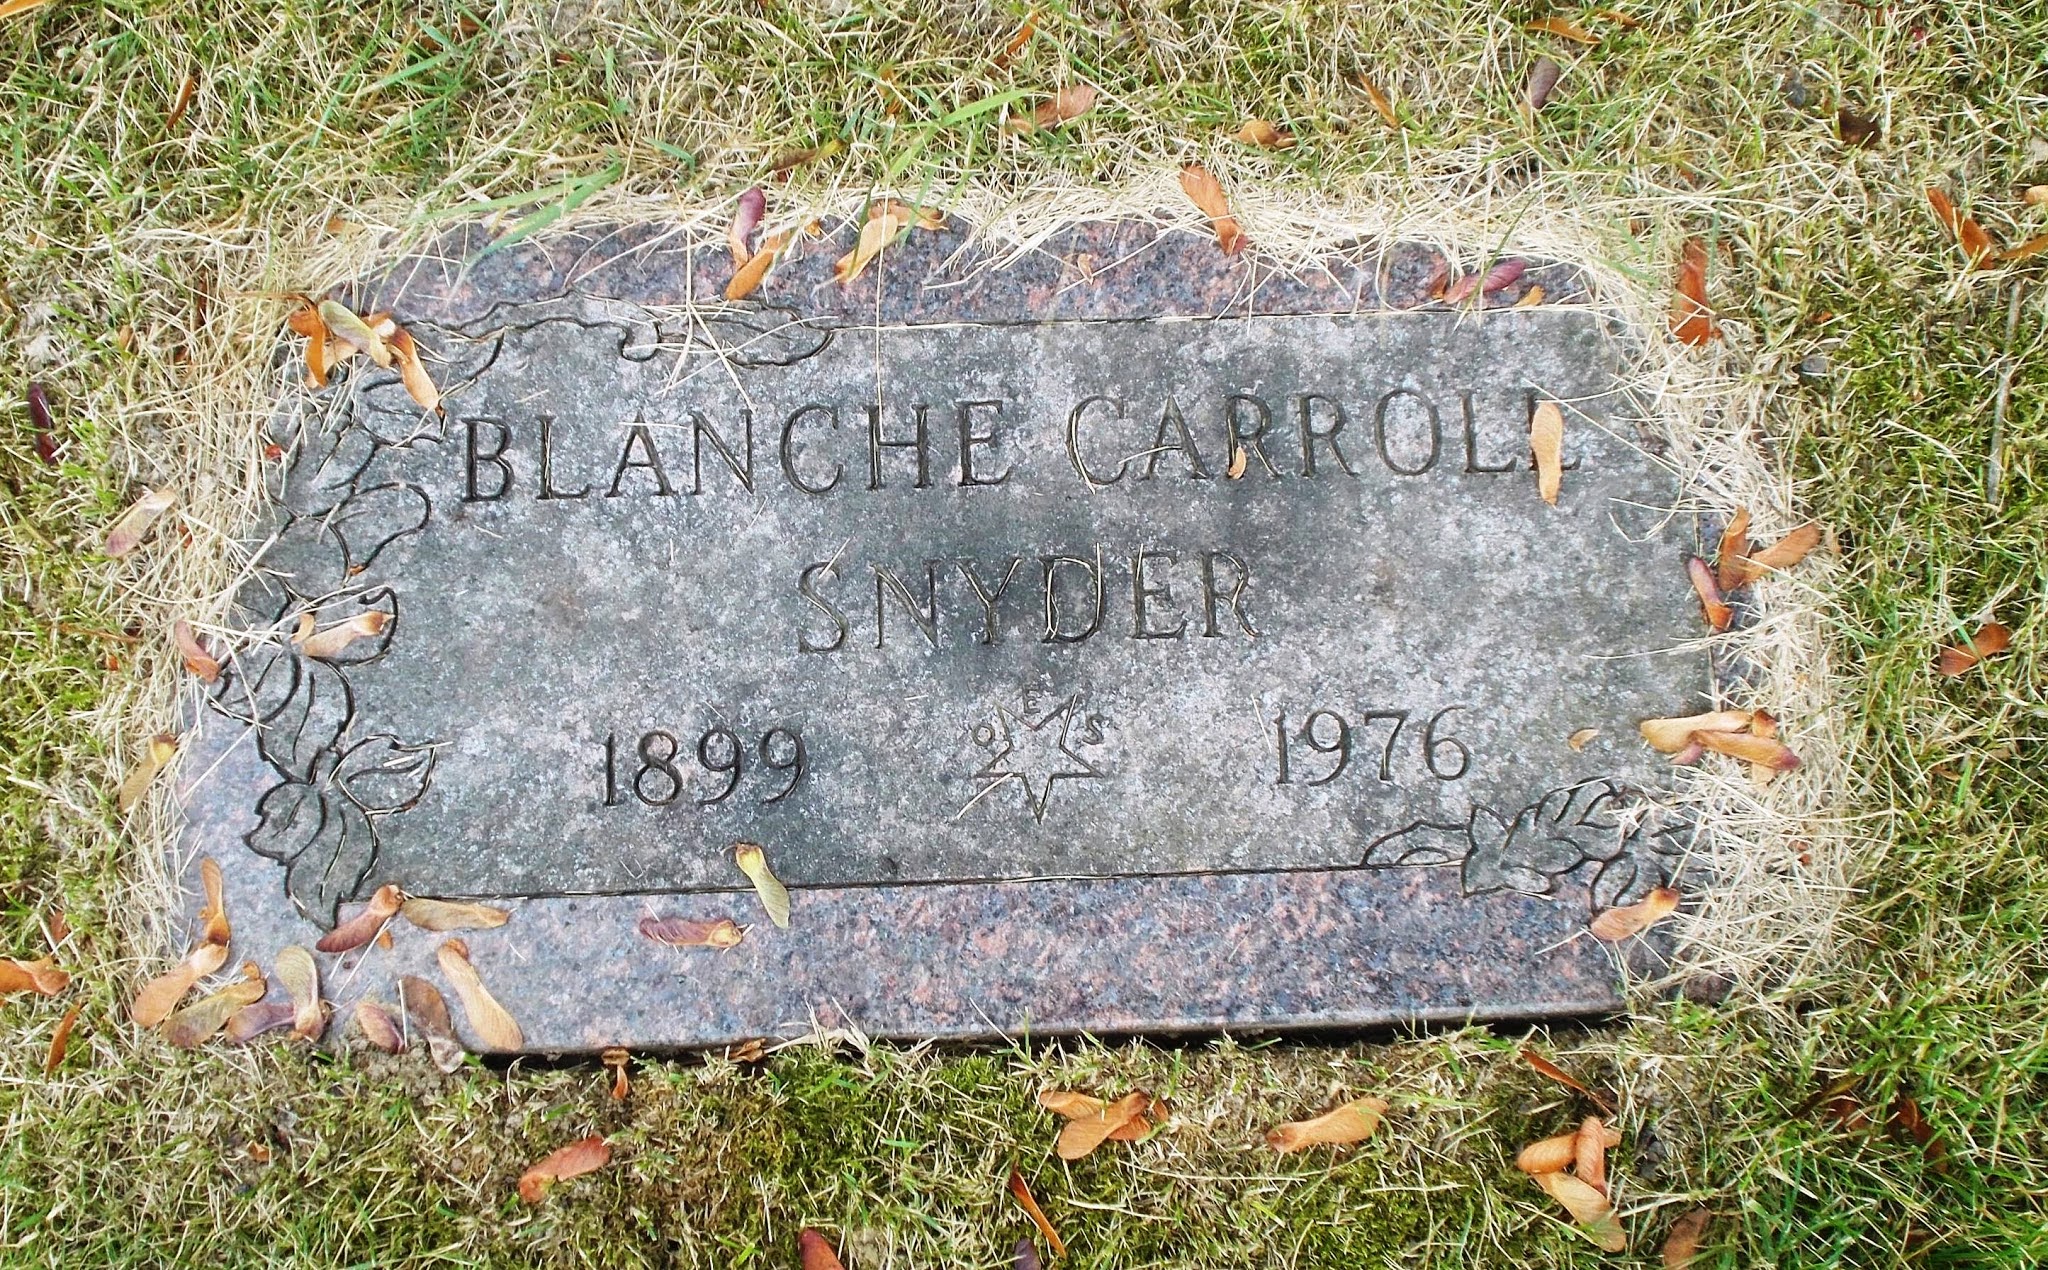 Blanche Carroll Snyder